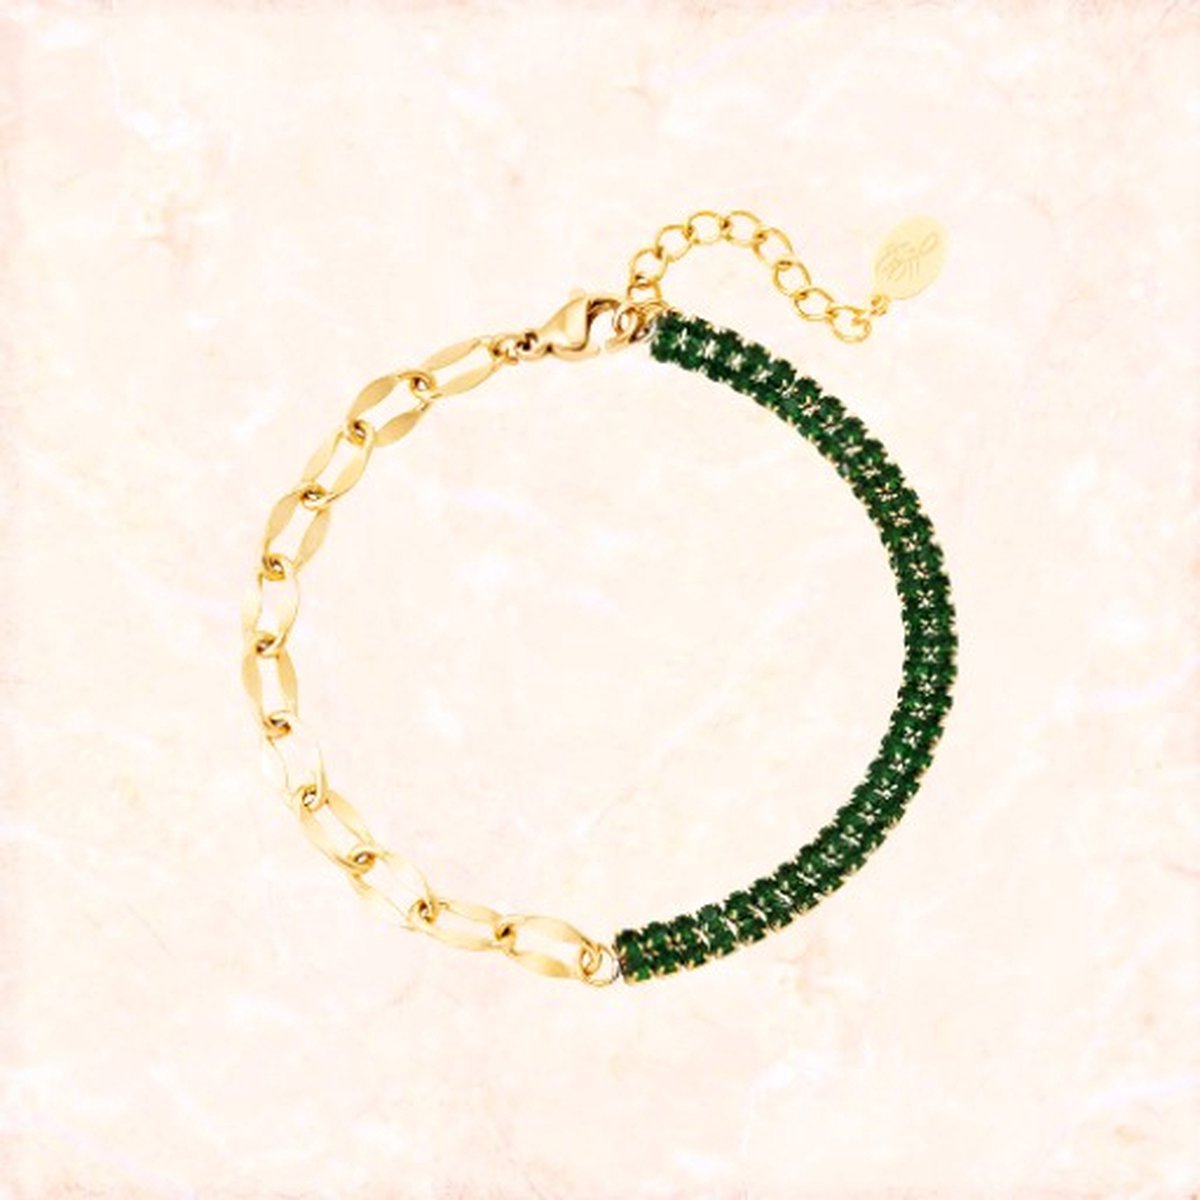 Jobo by Jet - Dames armbandje - Stainless steel - Goud - groene diamantjes - Waterproef - Prachtig armbandje